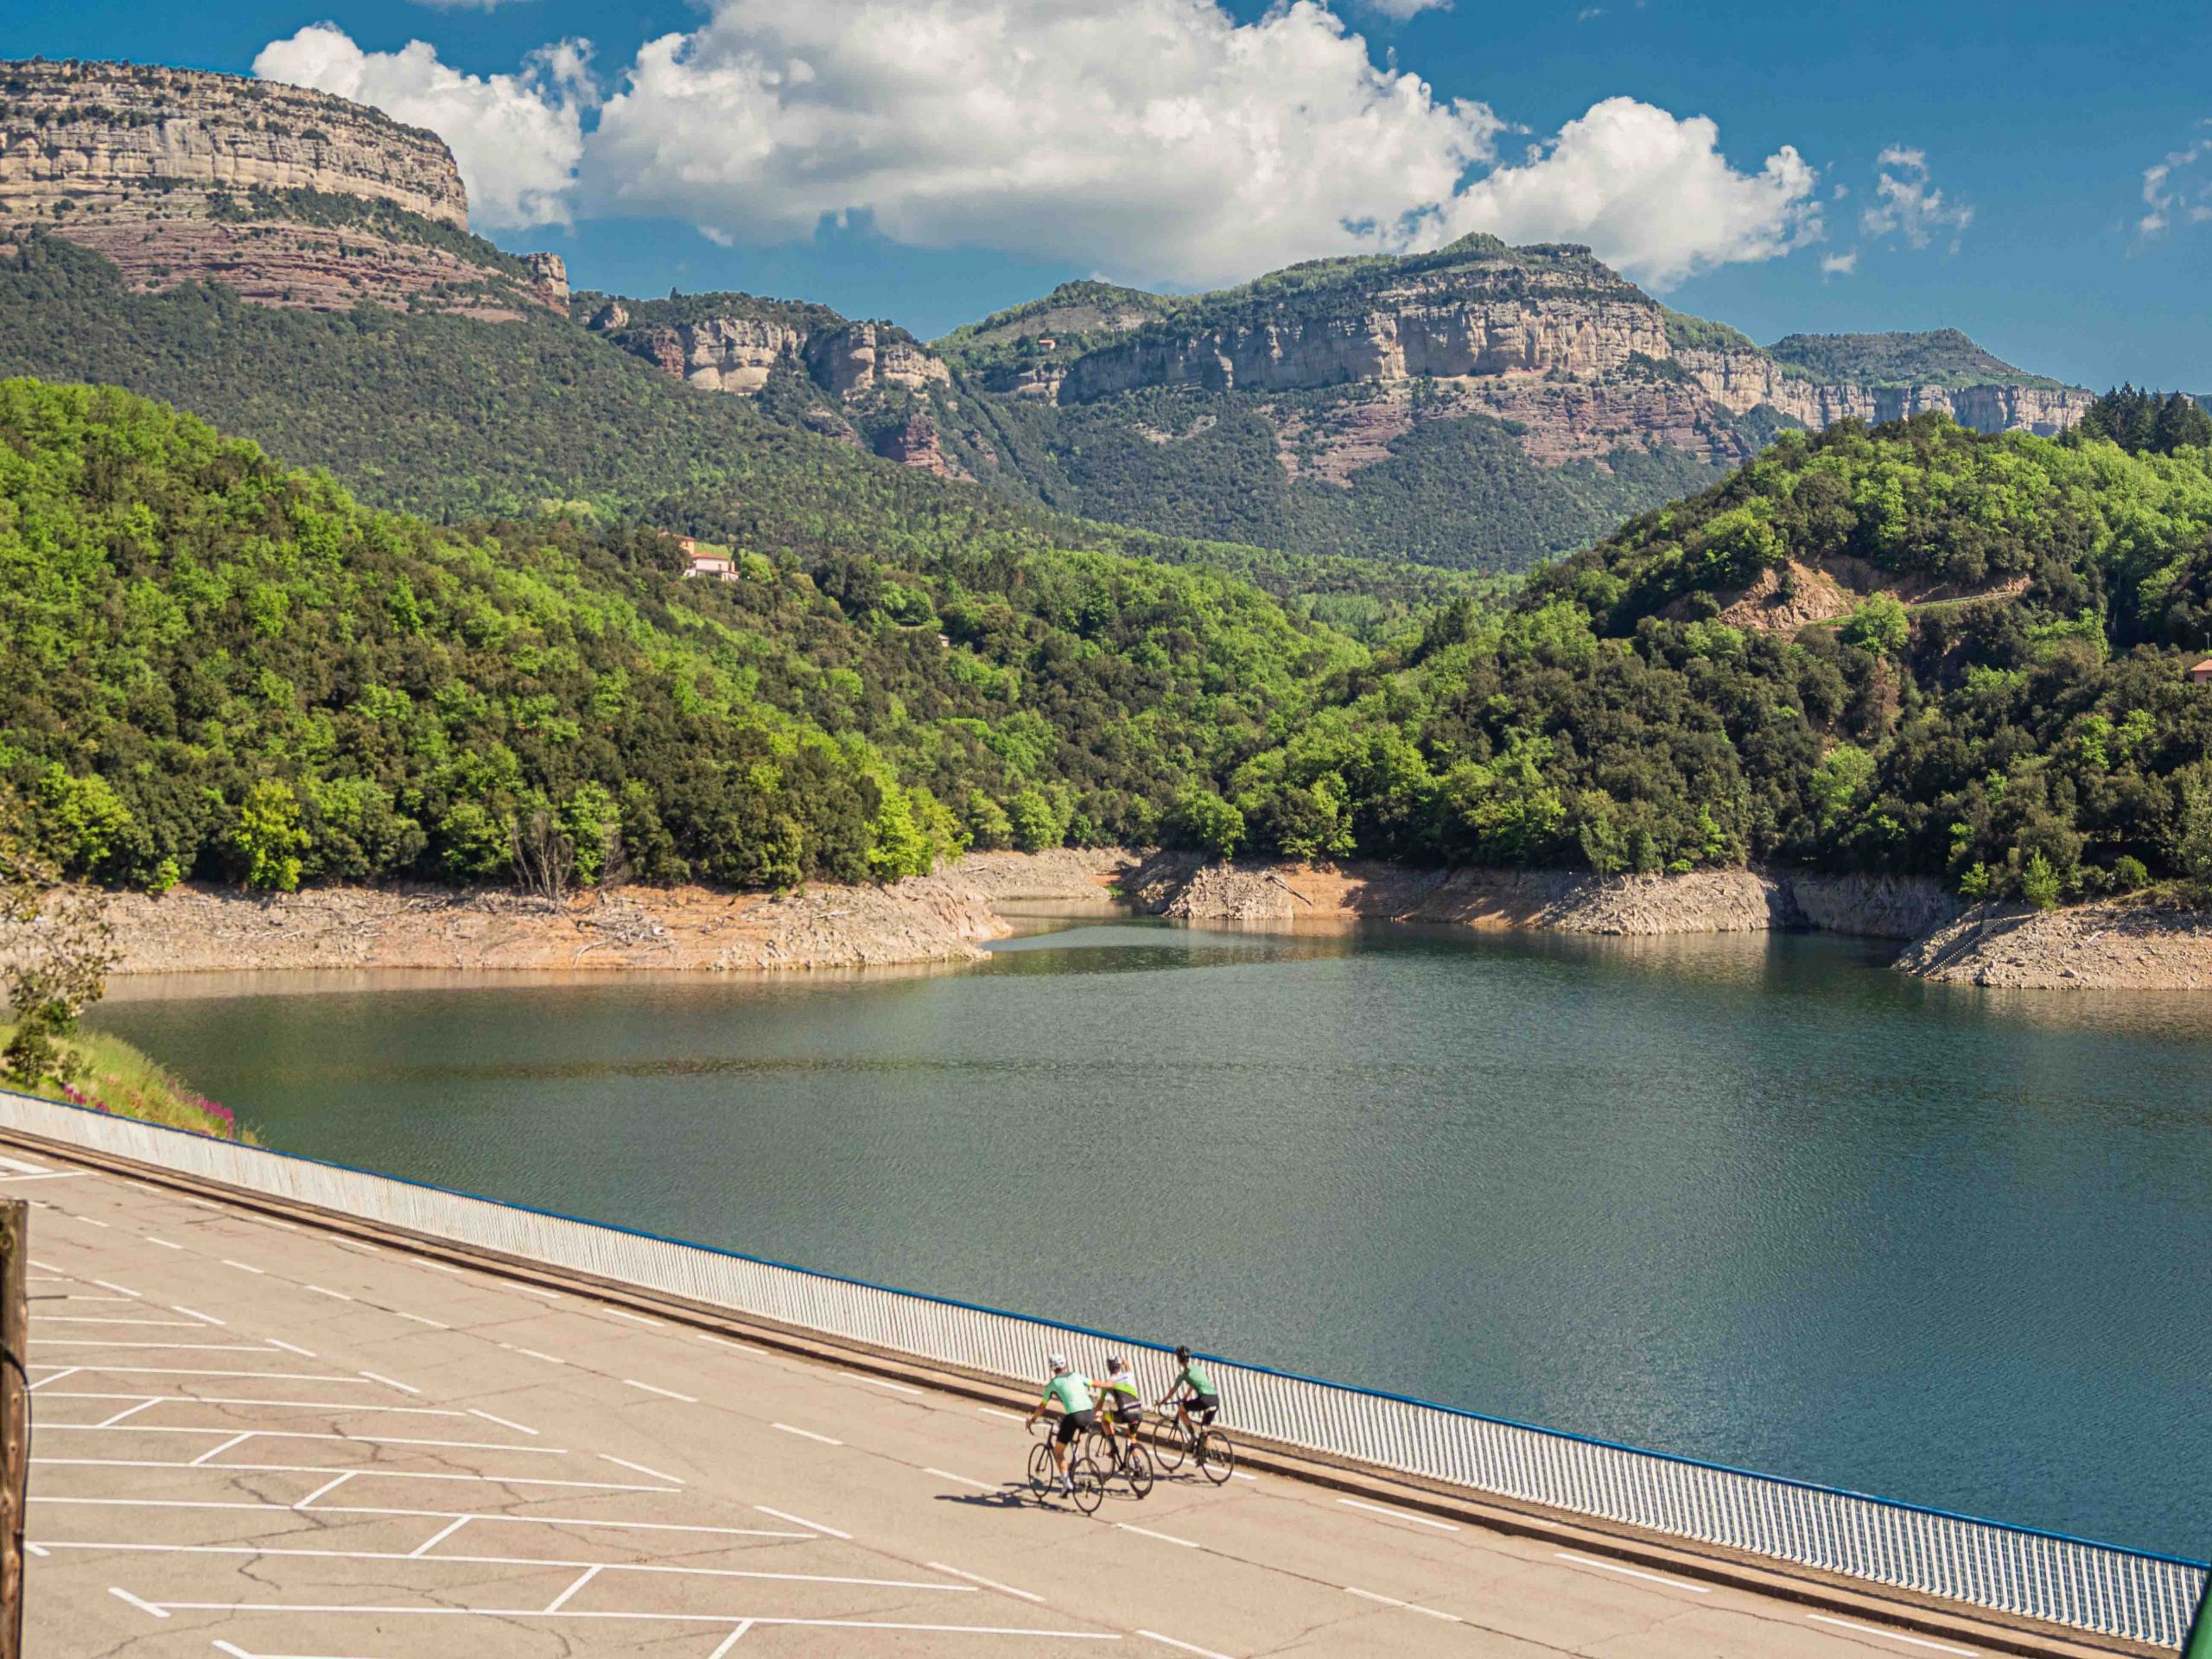 Cyclists near a lake in the Osona region near Barcelona, Spain